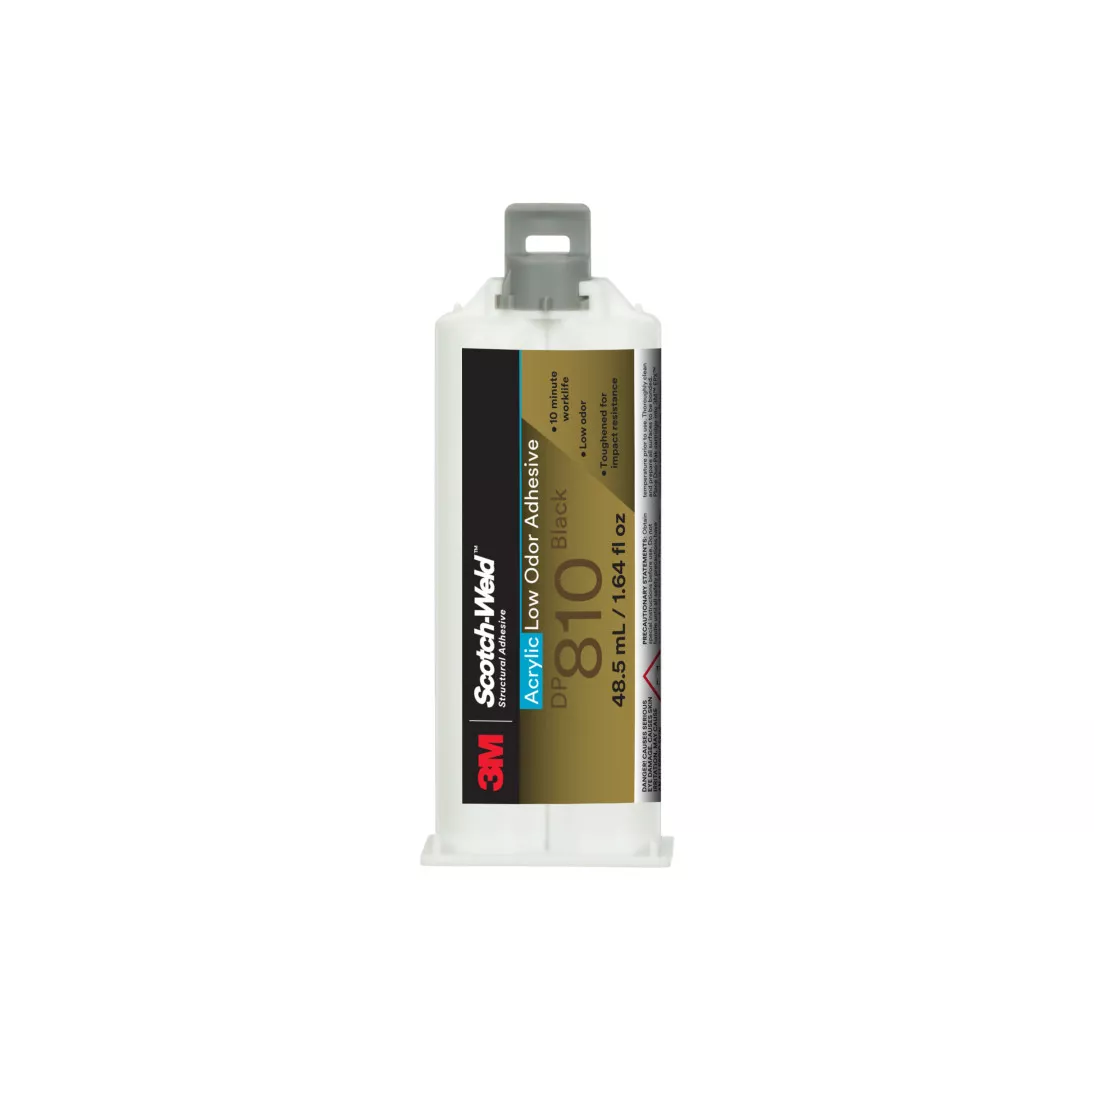 3M™ Scotch-Weld™ Low Odor Acrylic Adhesive DP810, Black, 48.5 mL
Duo-Pak, 12/case